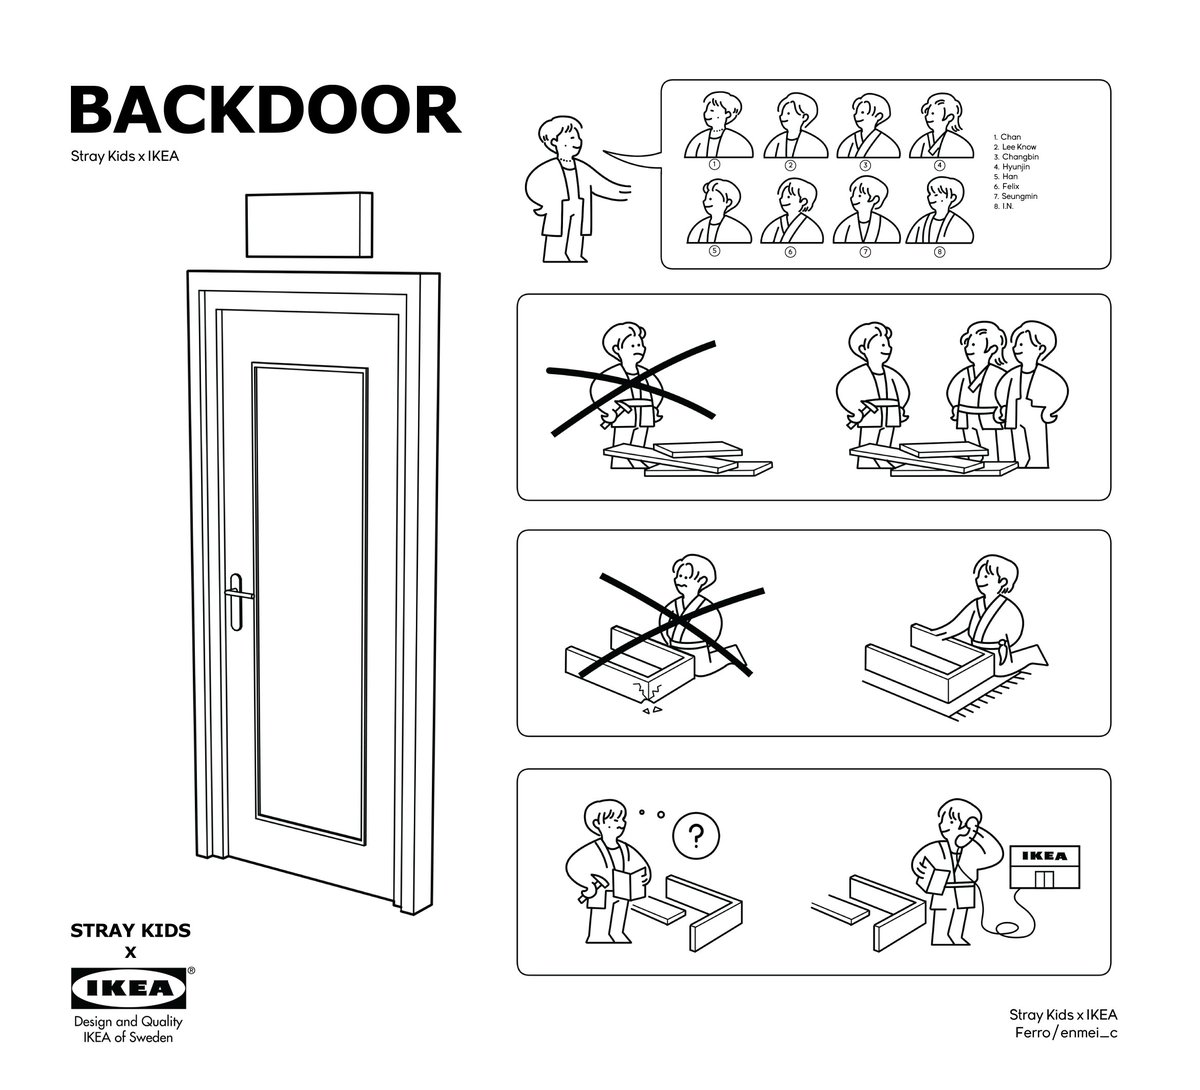 So I think we need new collaboration
Backdoor
Stray Kids x IKEA
#StrayKids #Straykidsfanart 